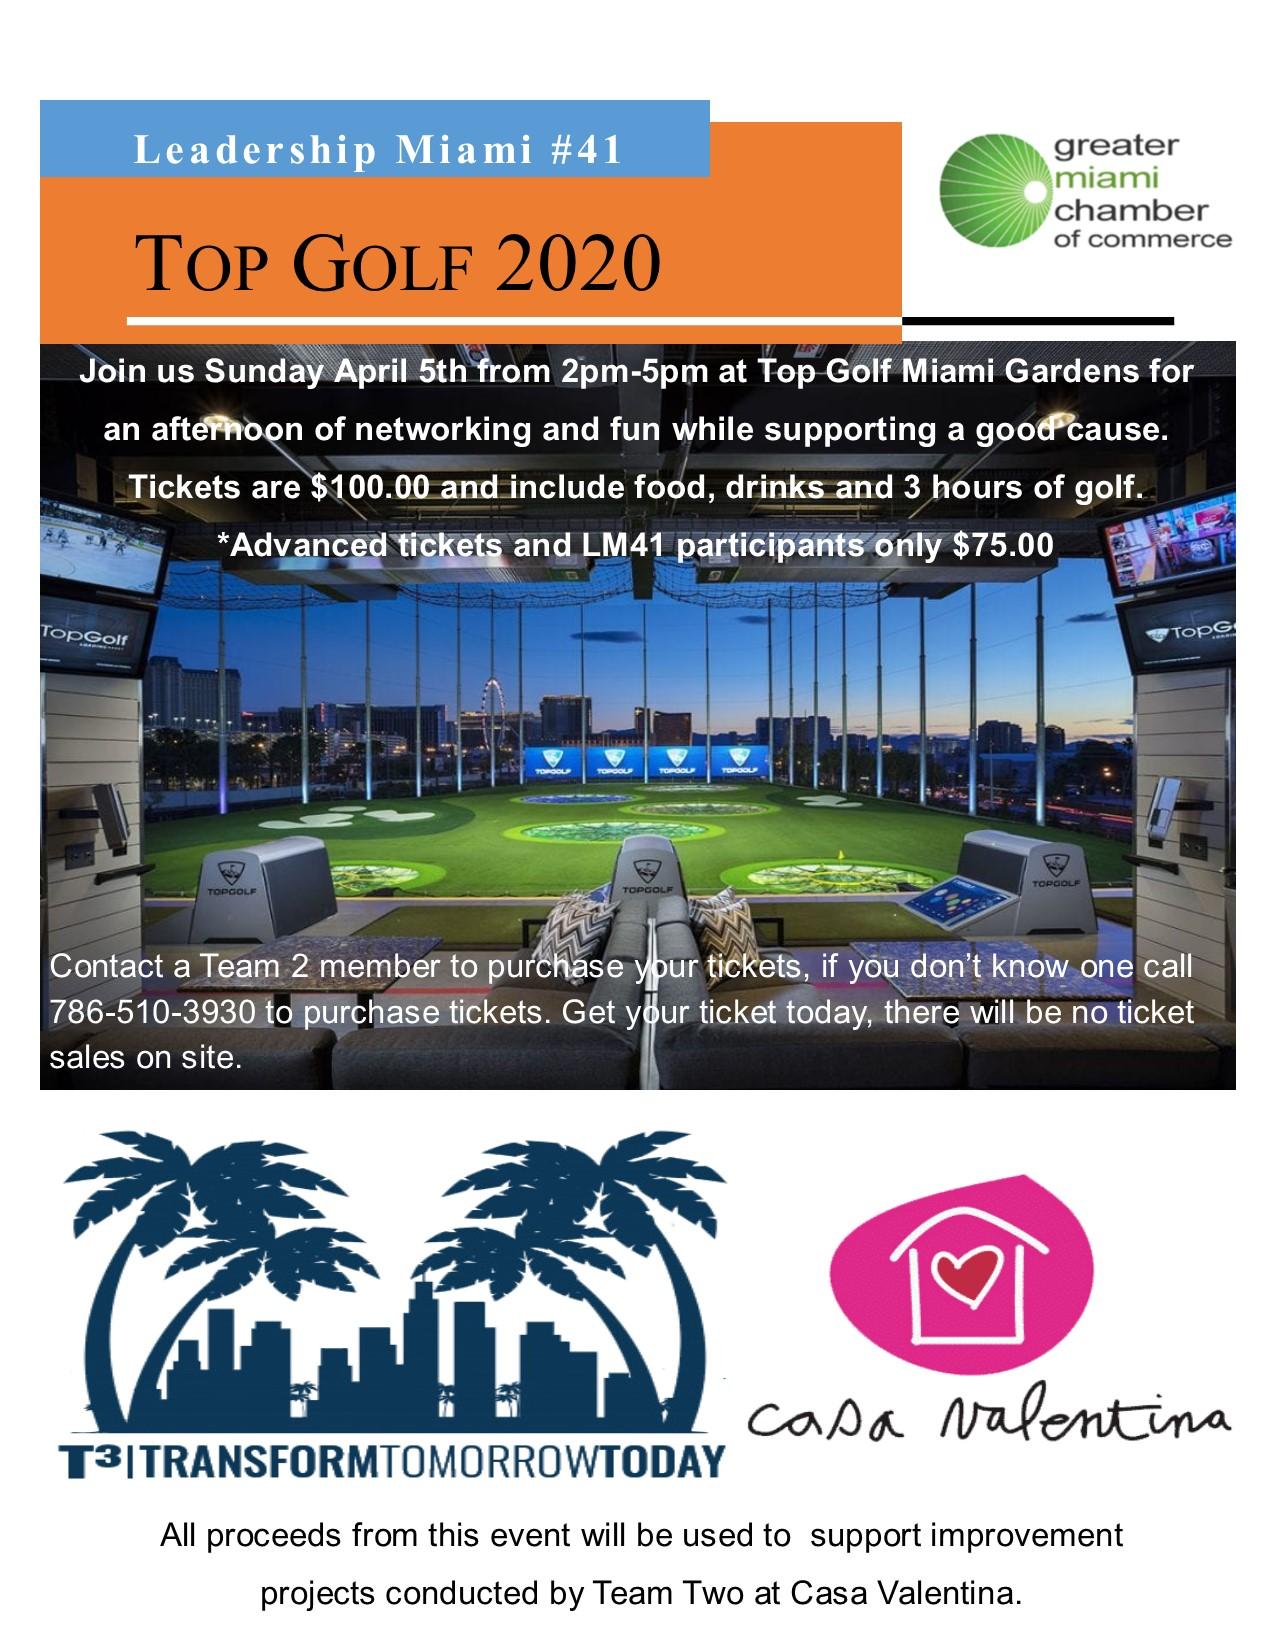 Leadership Miami Team Two Top Golf 2020